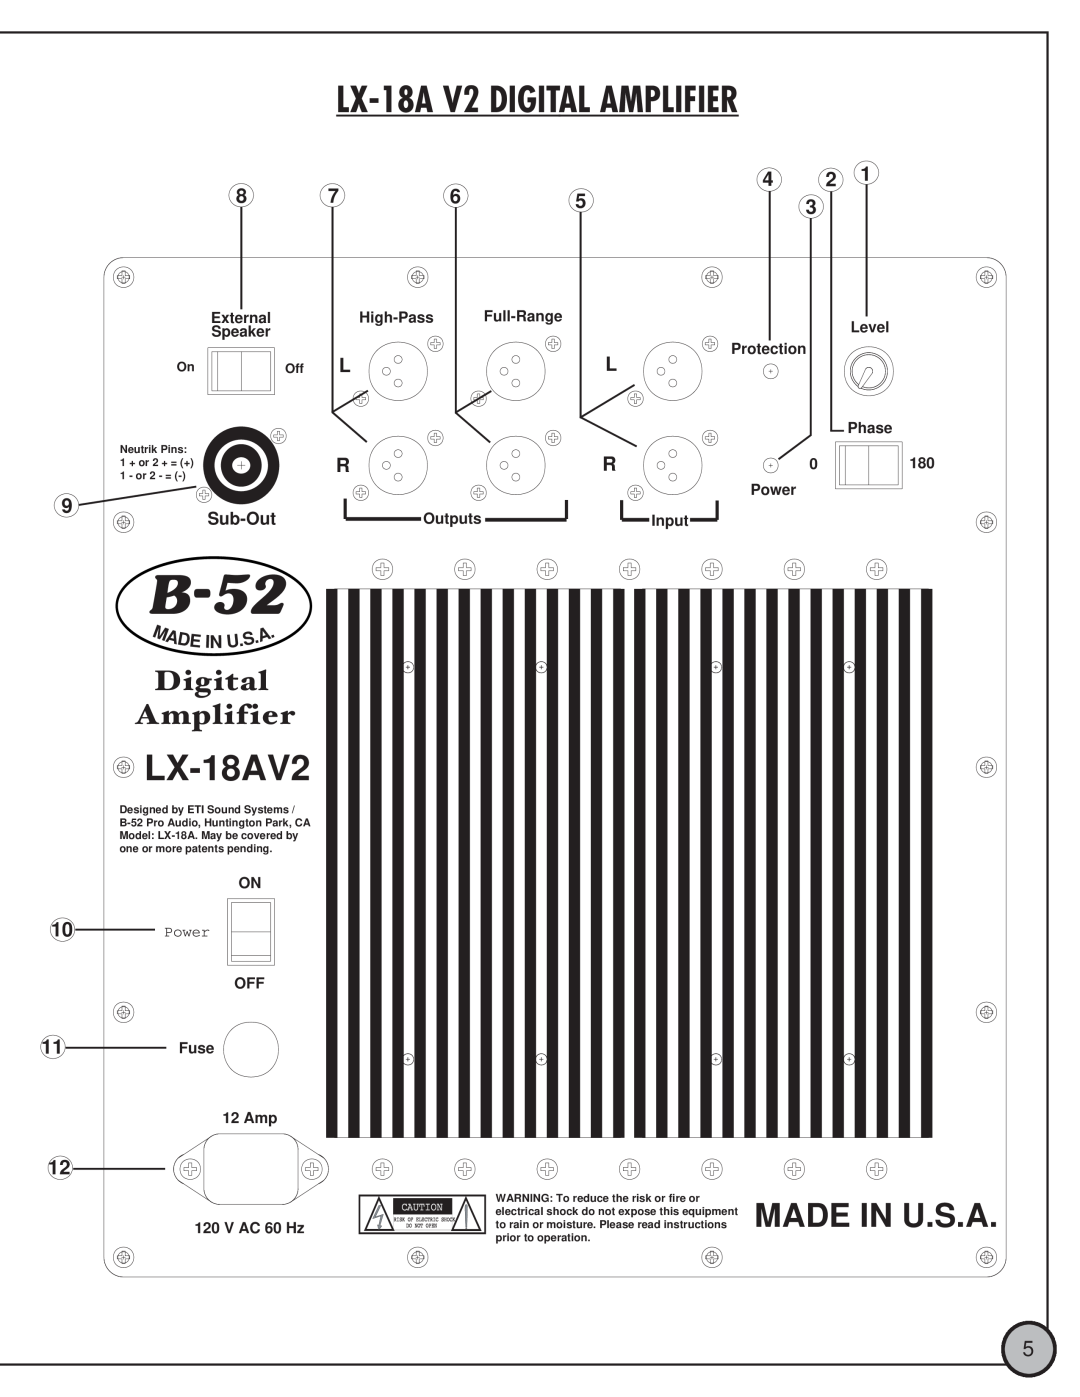 ETI Sound Systems, INC LX18A V2 manual LX-18AV2 DIGITAL AMPLIFIER, B-52, Made In U.S.A, Amplifier, Digital 